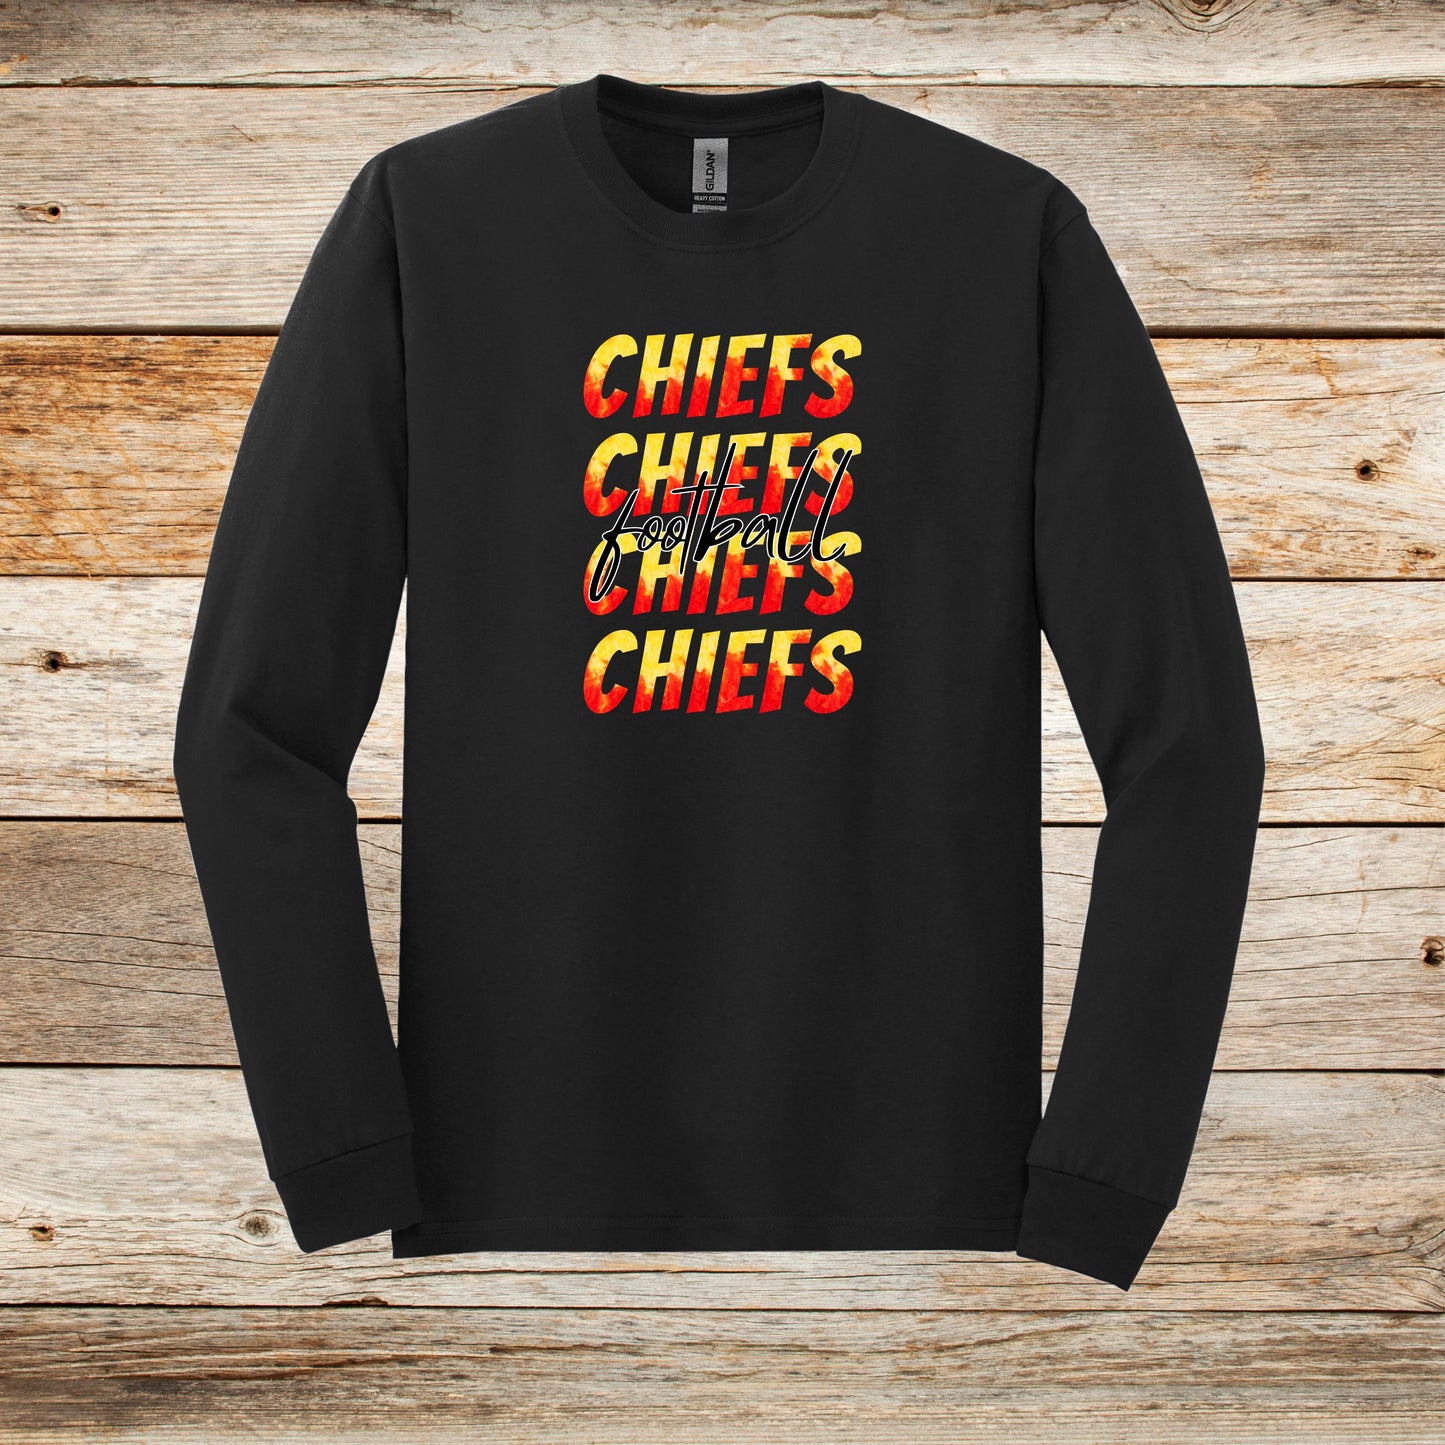 Football Long Sleeve T-Shirt - Kansas City Chiefs Football - Chiefs Football - Adult and Children's Tee Shirts - Sports Long Sleeve T-Shirts Graphic Avenue Black Adult Small 